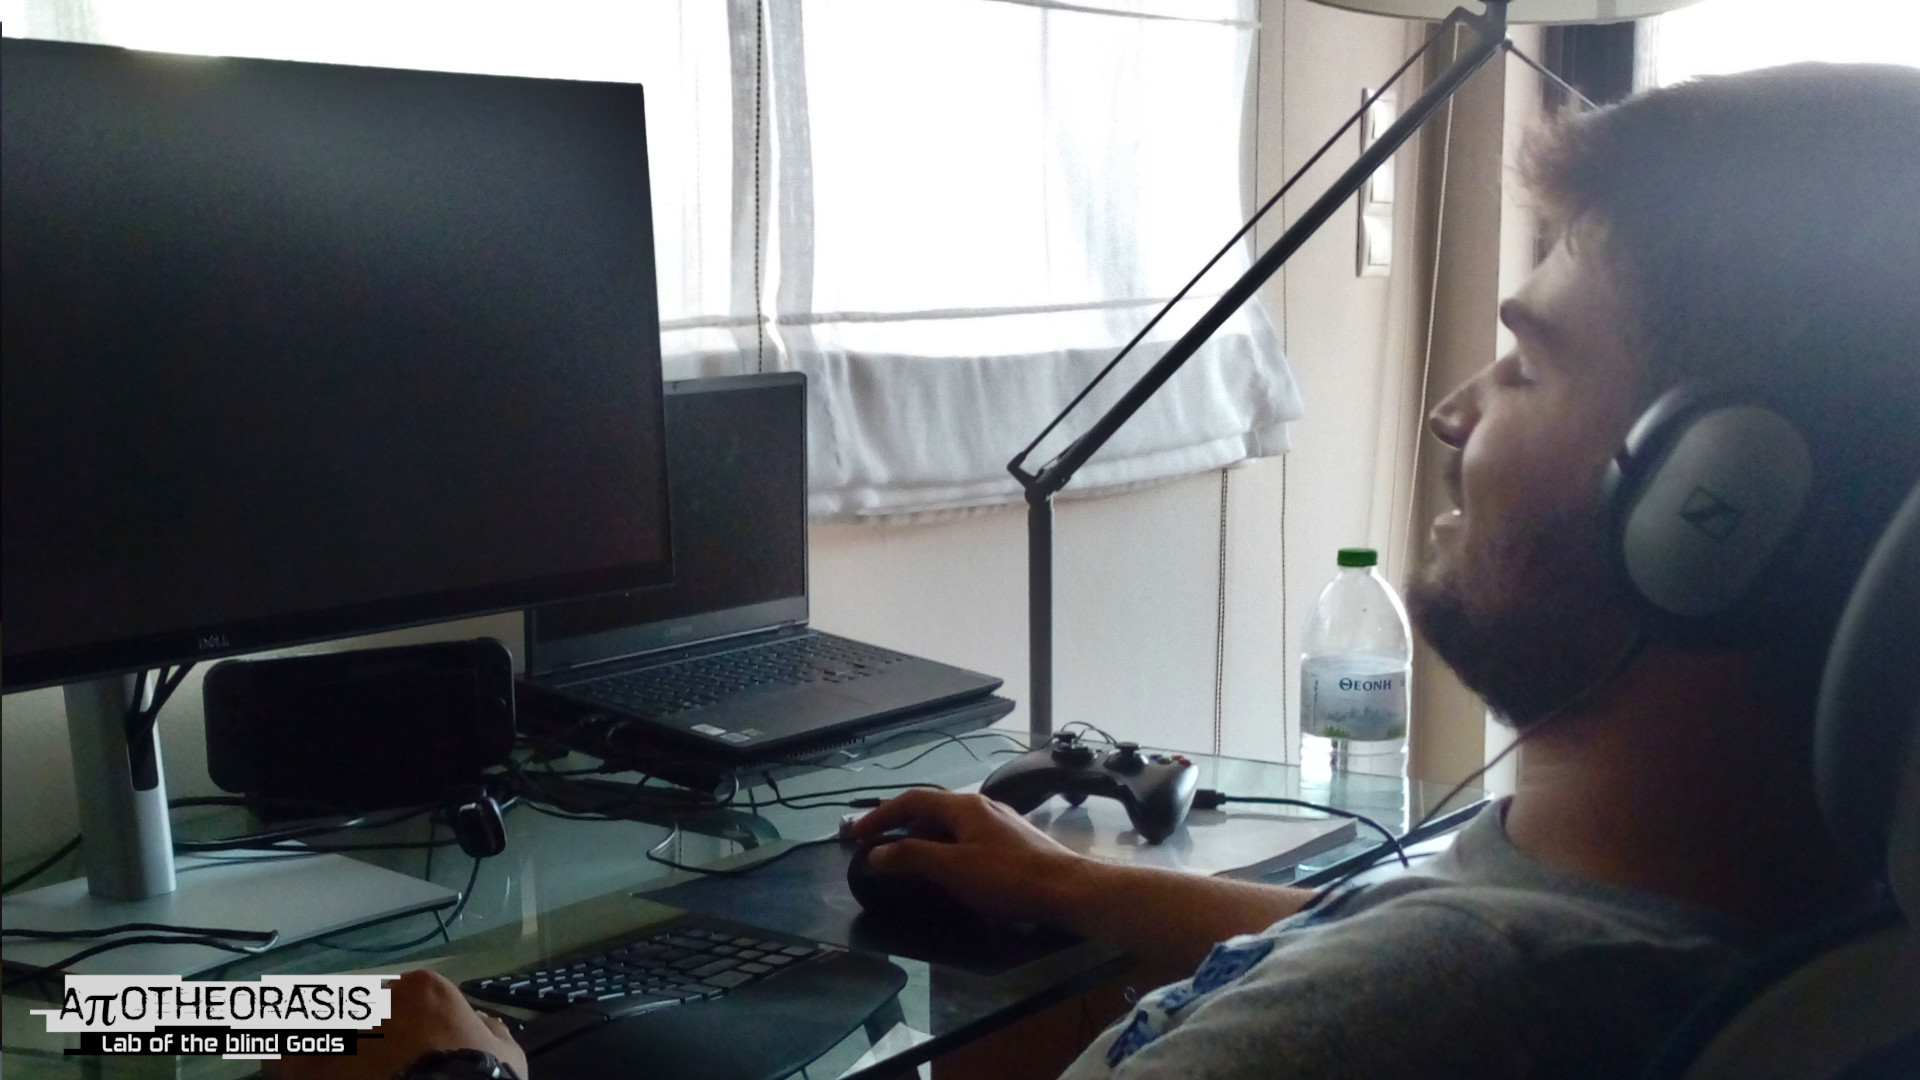 Apotheorasis - a man leans back, eyes shut while sitting at his computer